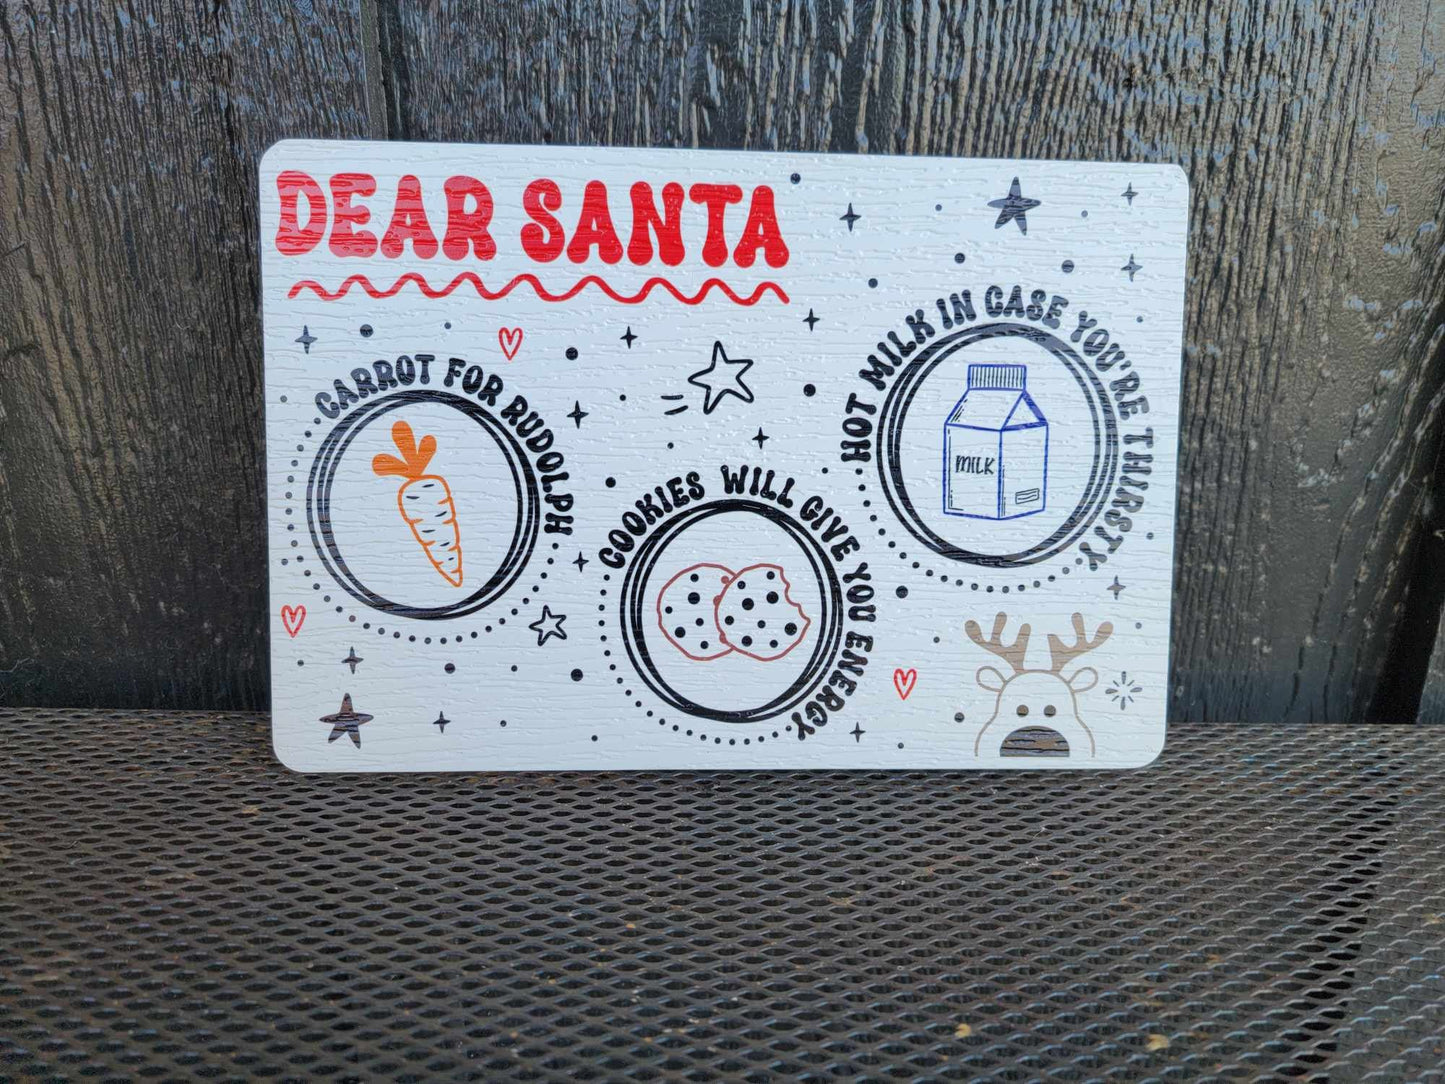 Dear Santa Tray Cookies Milk Reindeer Carrot PVC Printed Christmas Day Treat Gift Snack Plate Leave for Santa